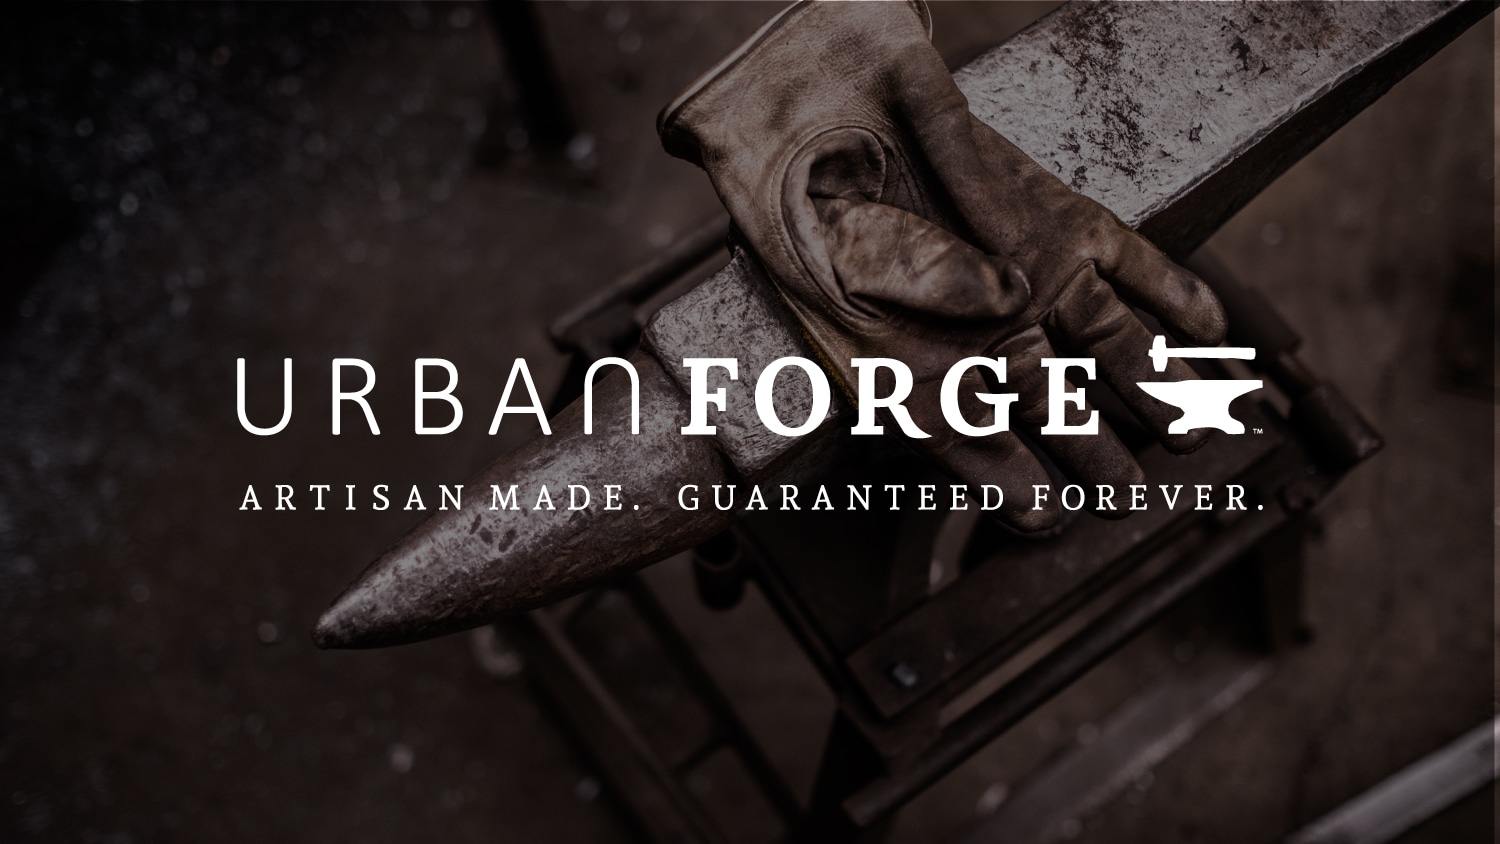 Urban Forge